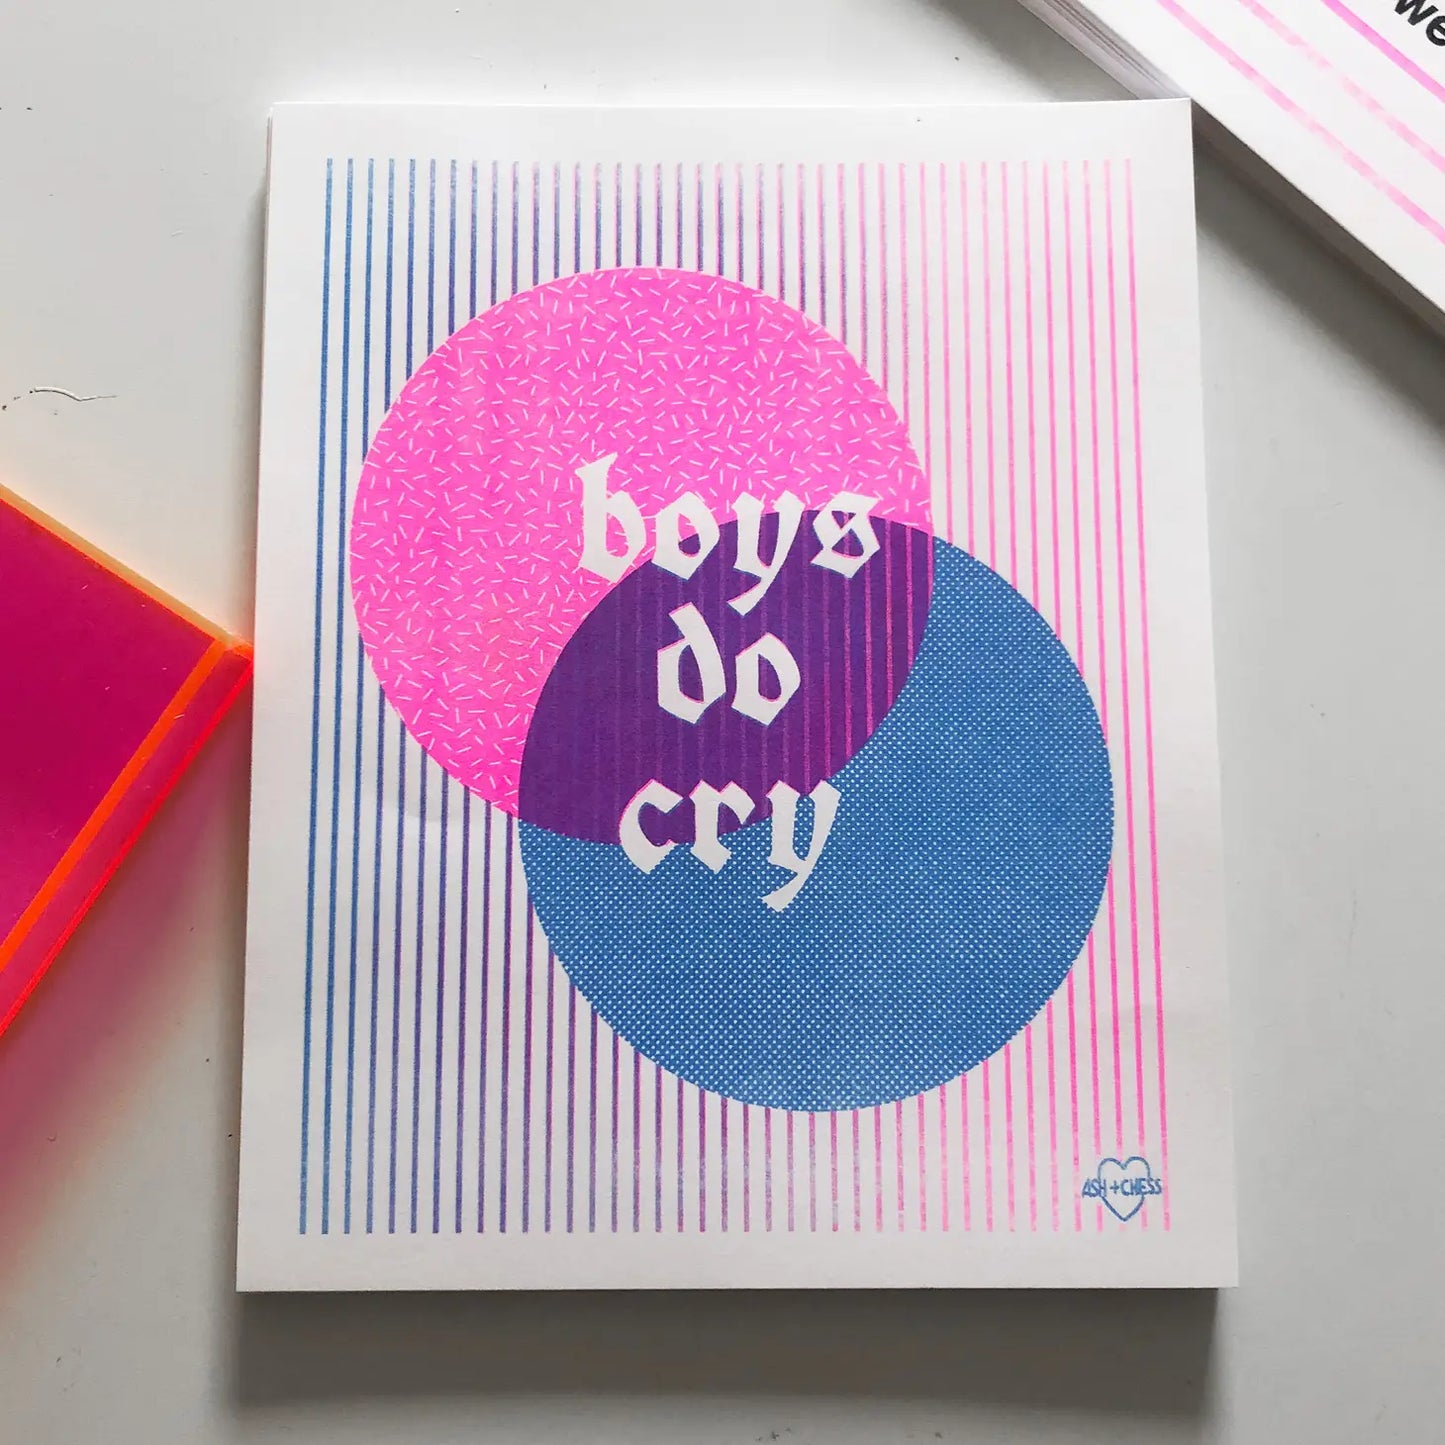 Boys Do Cry Risograph Print - 8x10